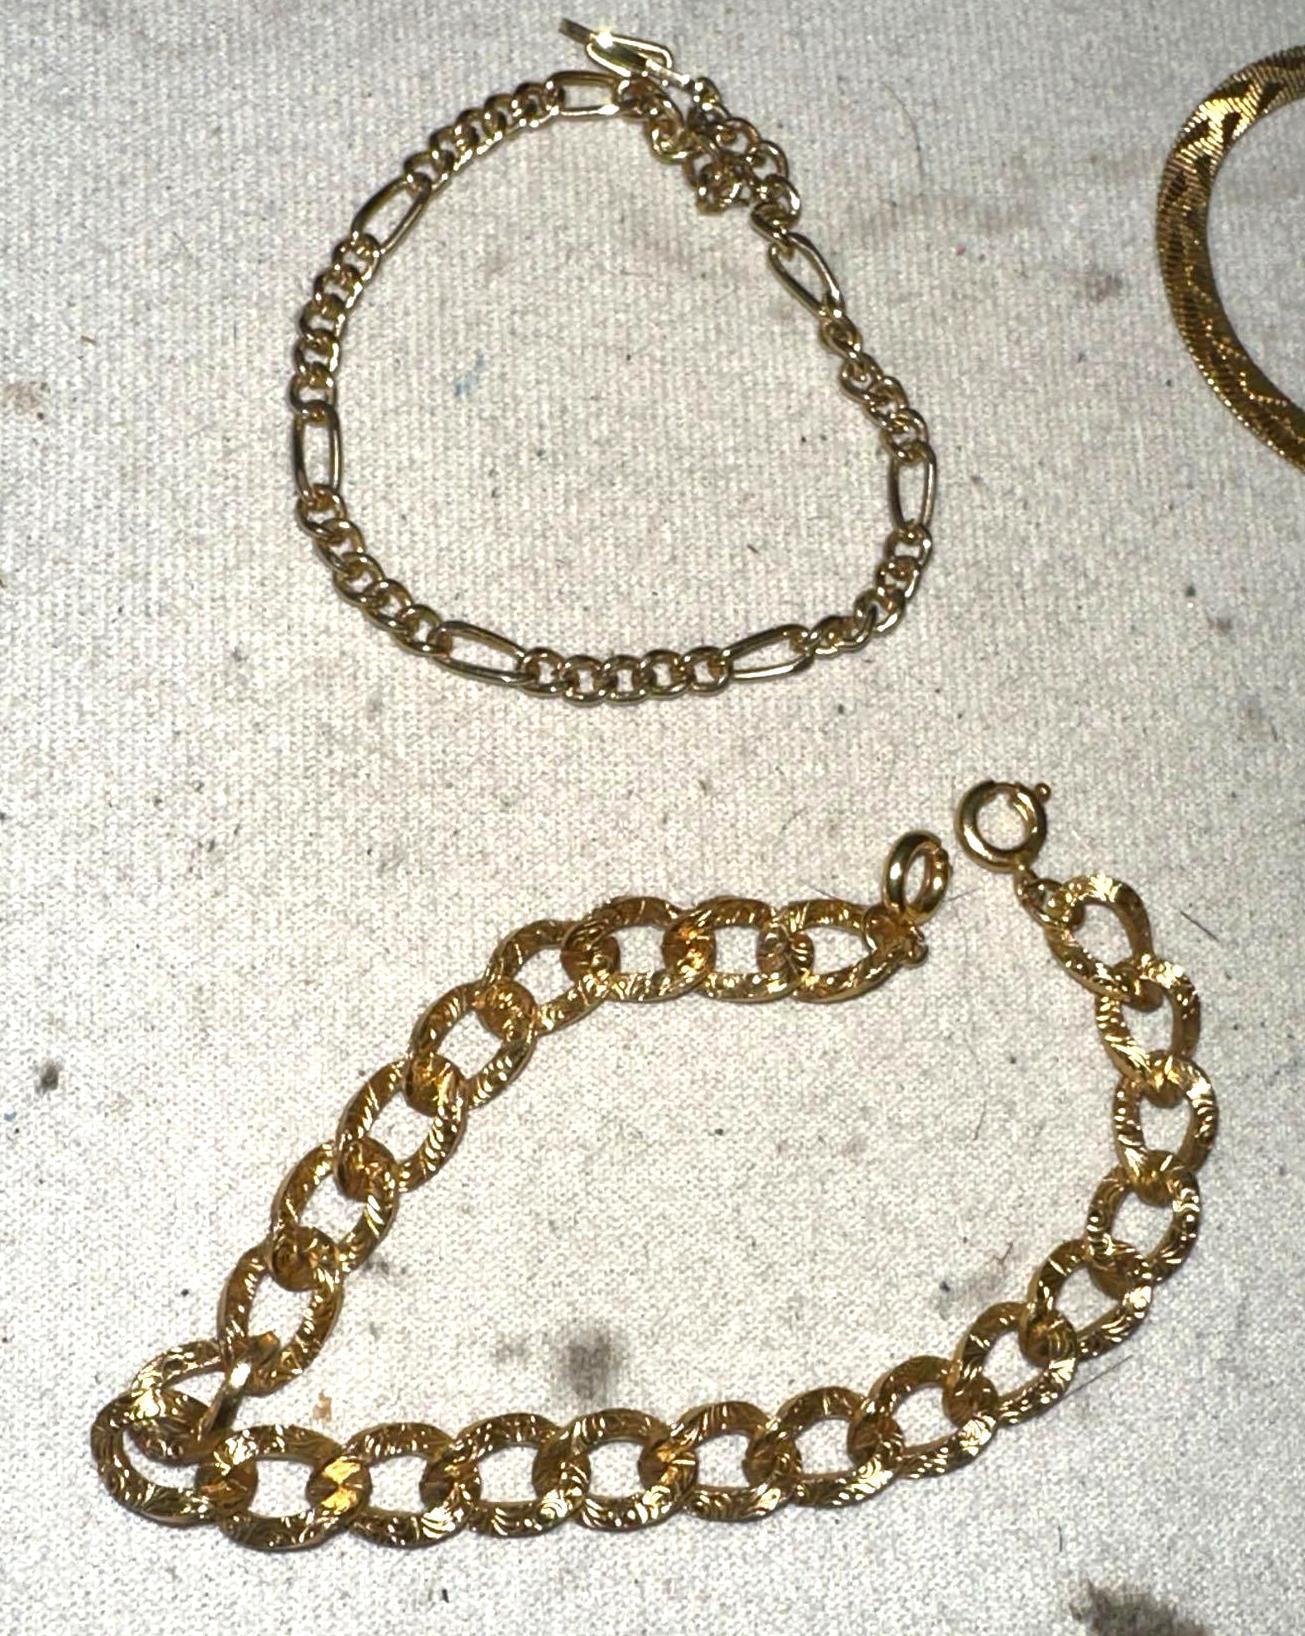 7 Assorted Mixed Gold-Tone Bracelets